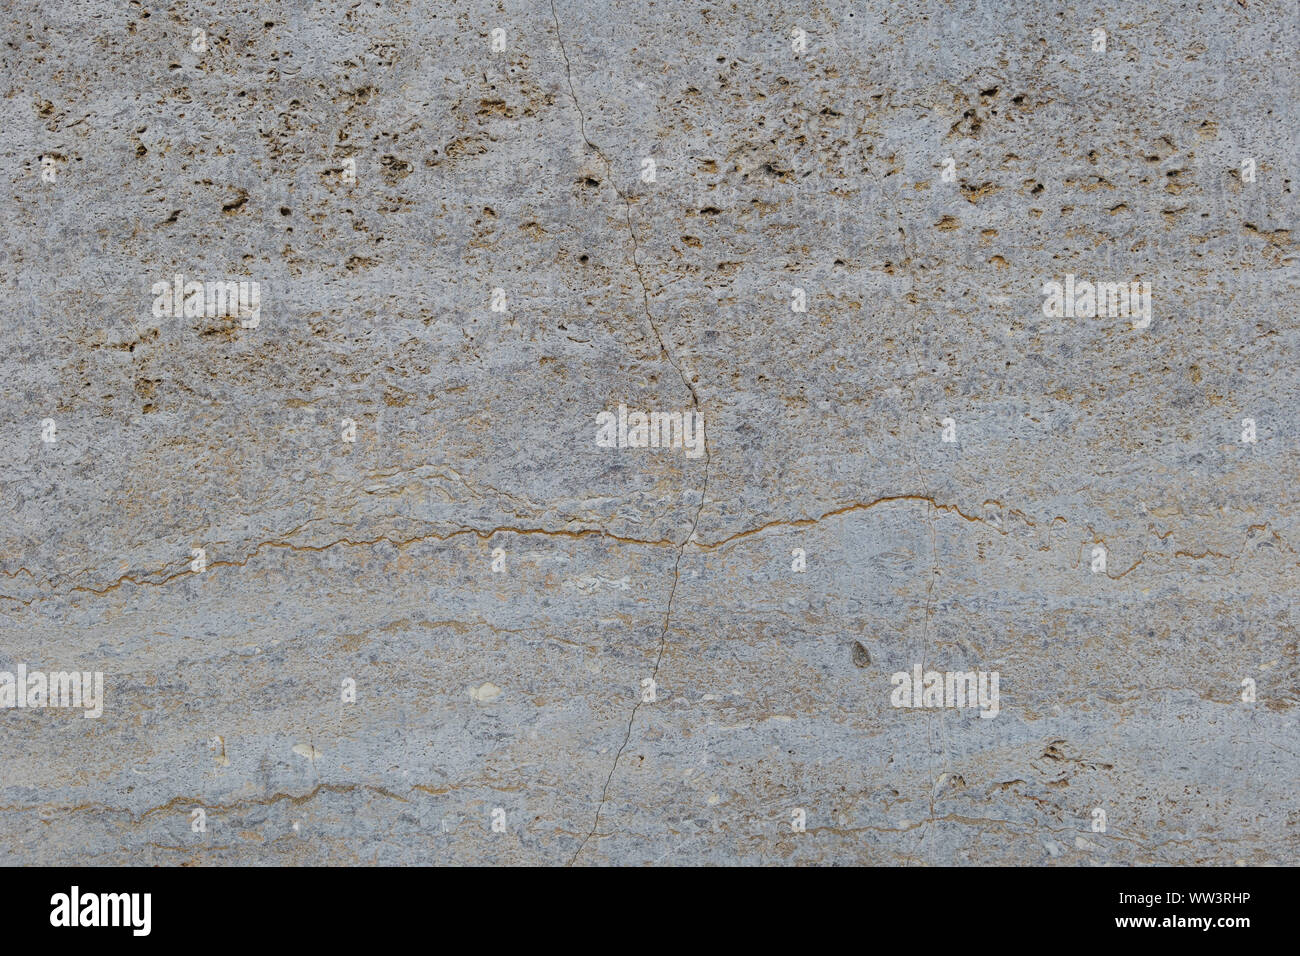 Rough white natural stone travertine with small random cavities. Limestone building material. Stock Photo